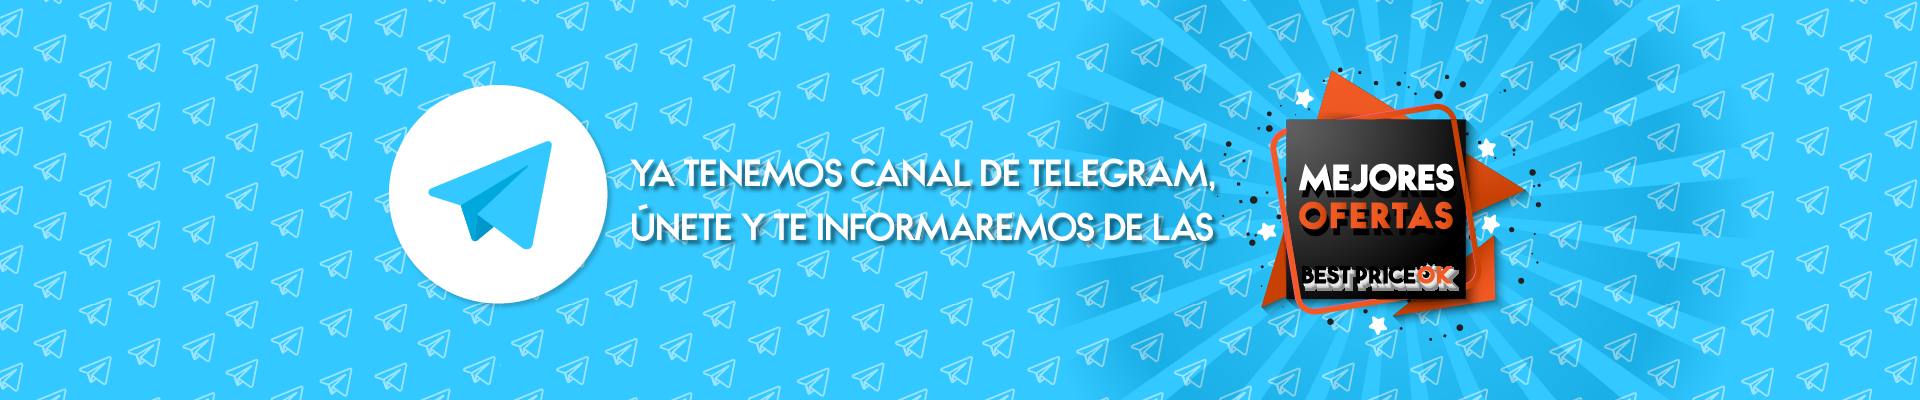 Canal telegram